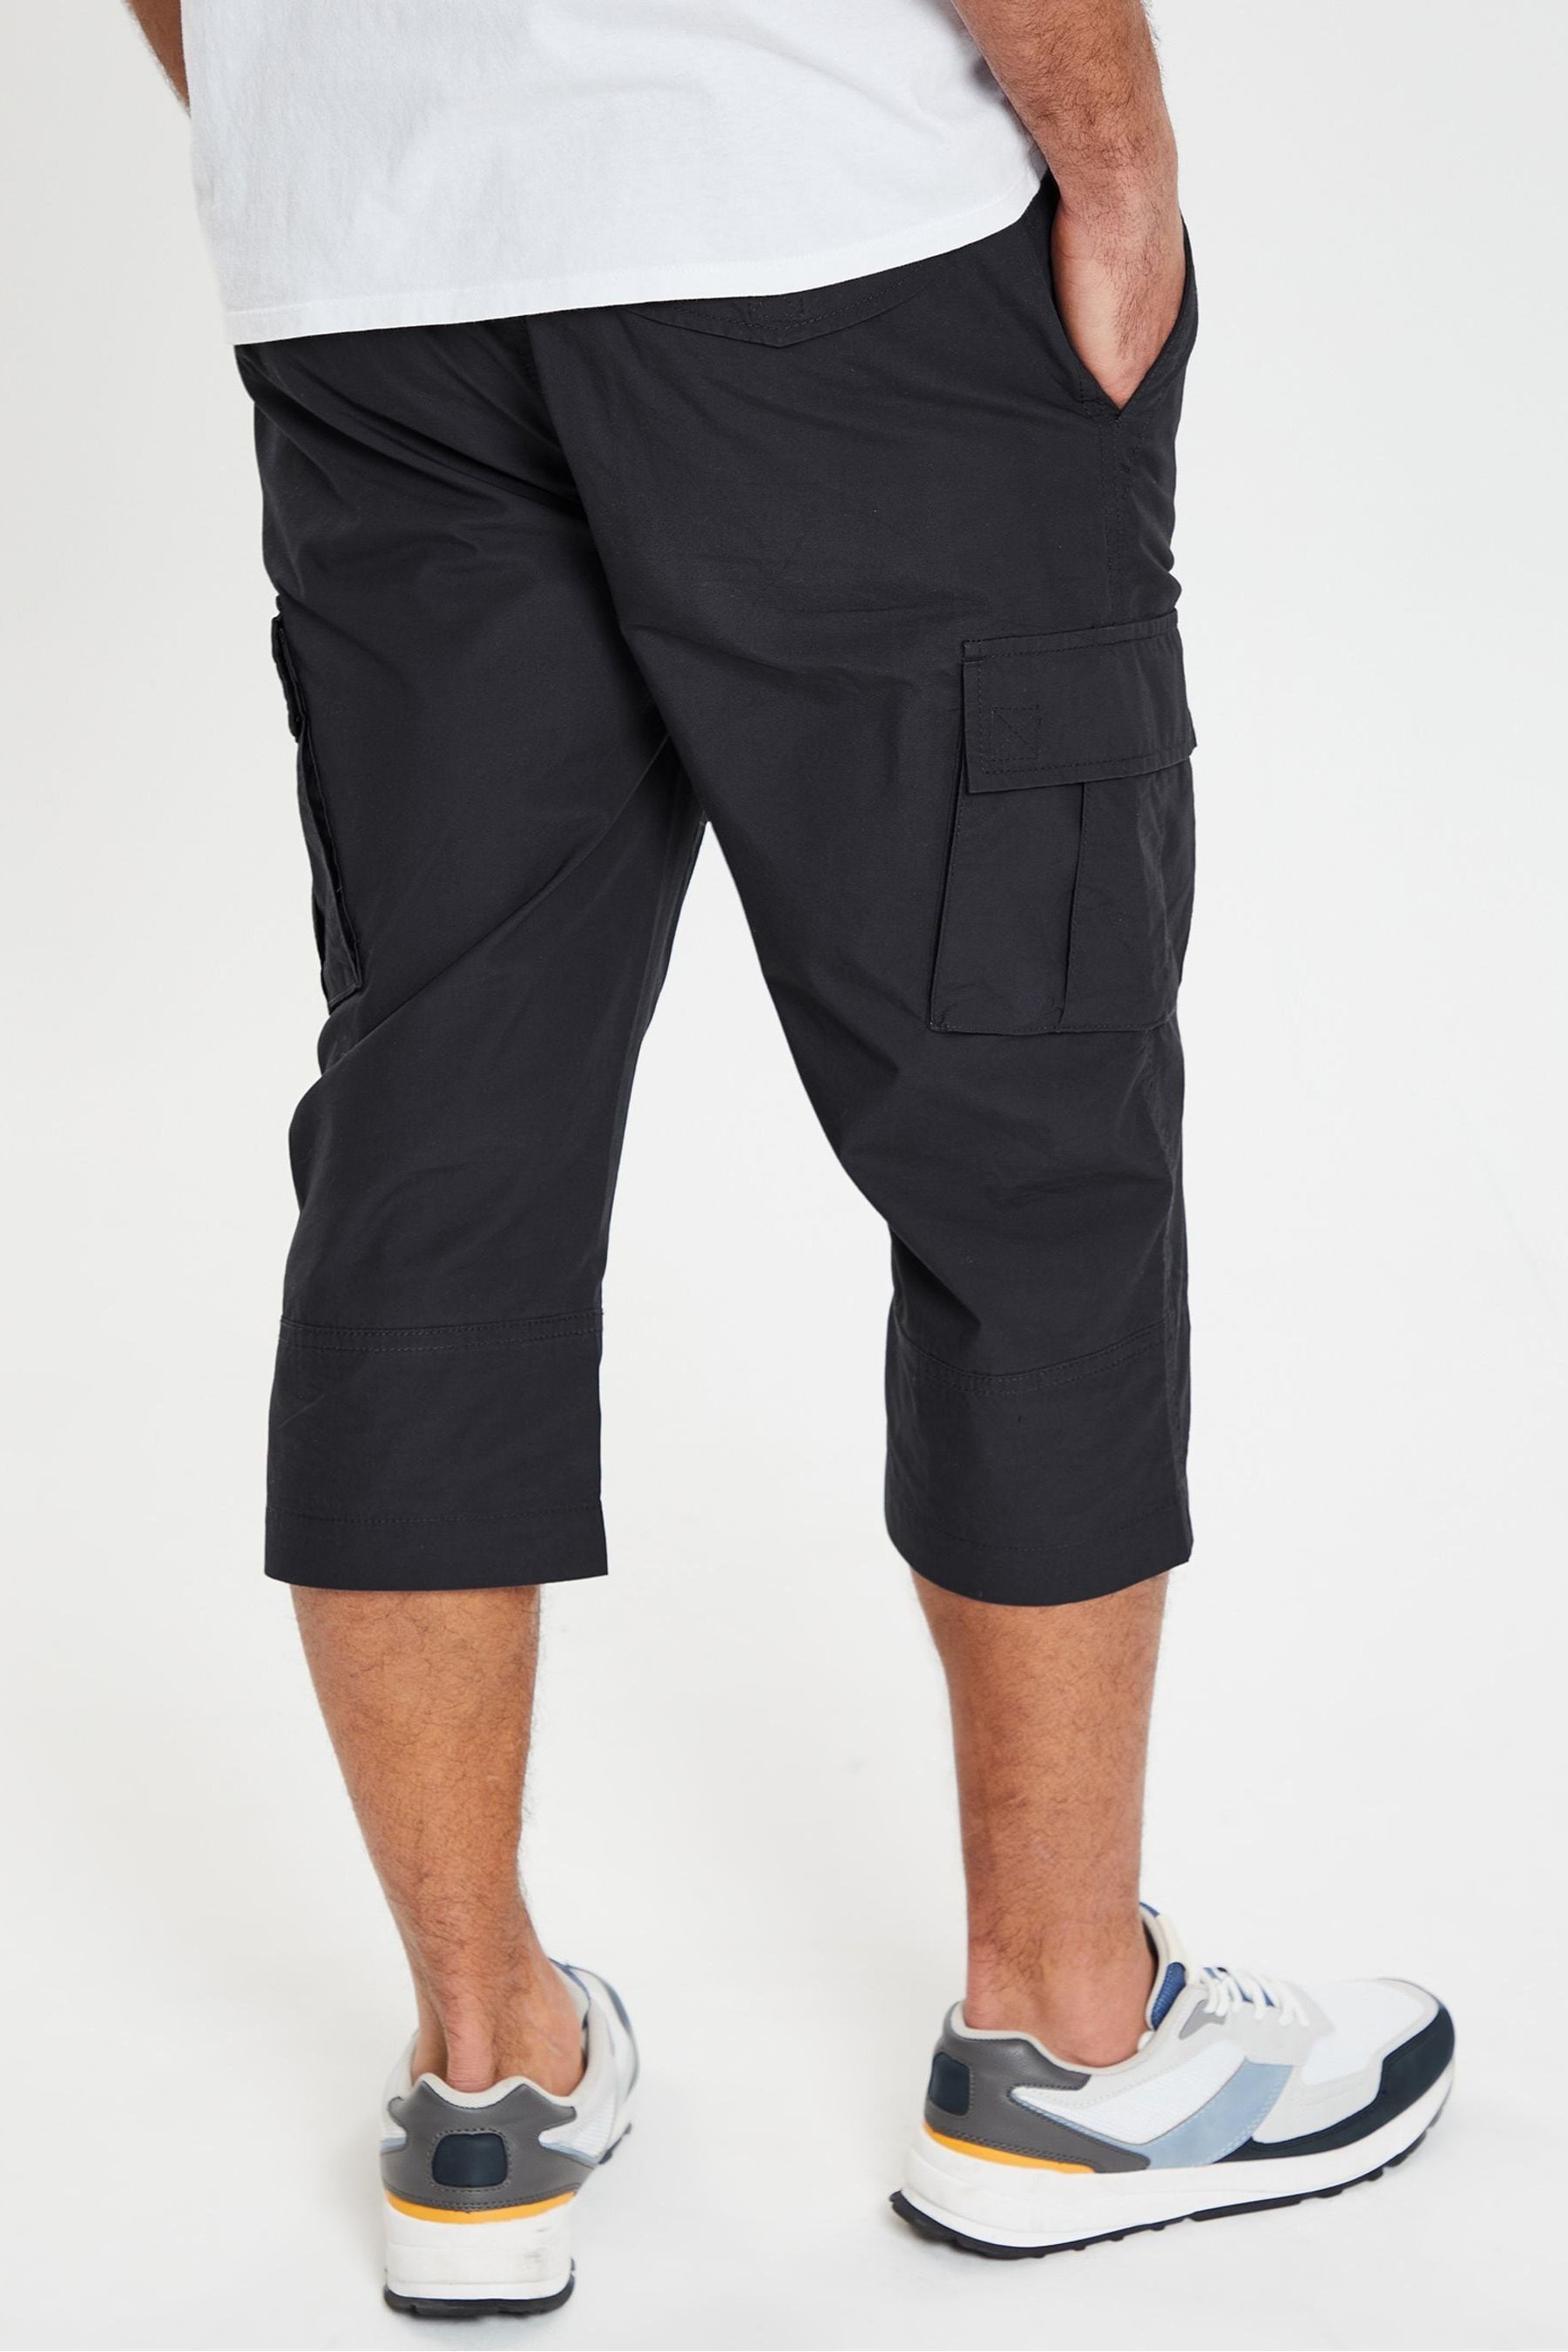 Buy CNC Mens Cotton 34 Shorts Capri Pants Casual Skinny Men Slim  Drawstring Pants Homme Male Capris Calf Length Trousers AllMatch Exercise  Clothing Online  699 from ShopClues